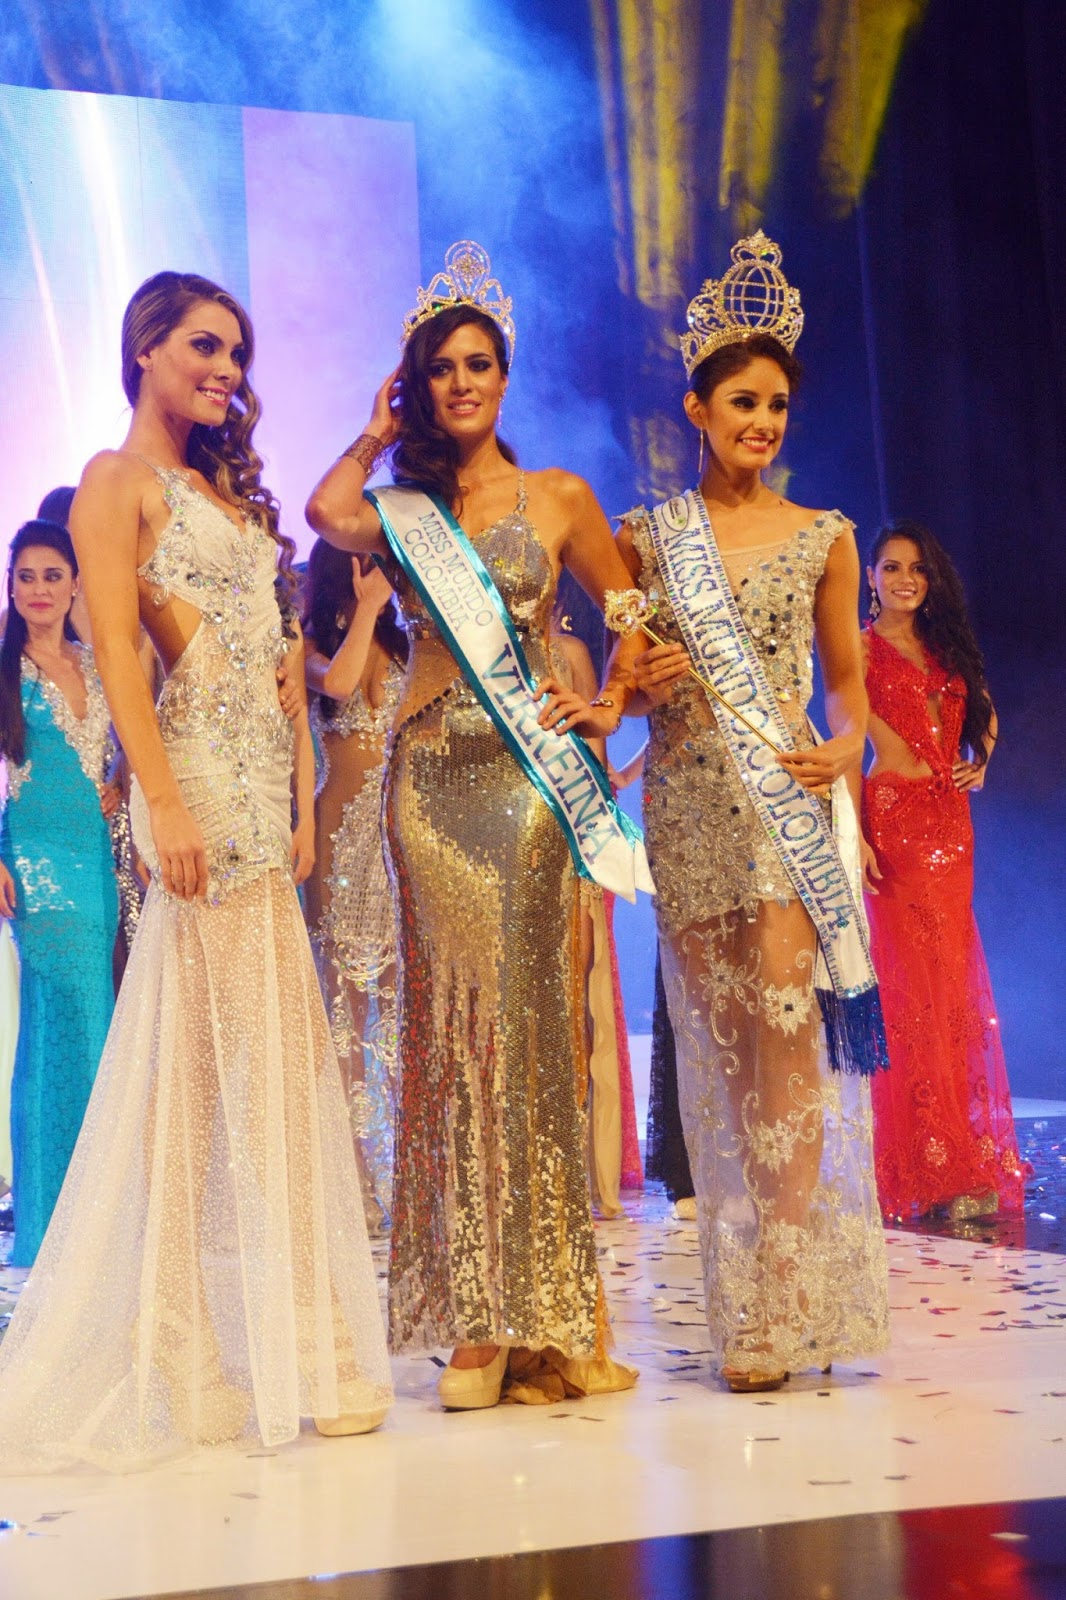 Miss World Mundo Colombia 2014 winner Jessica Leandra Garcia Caicedo